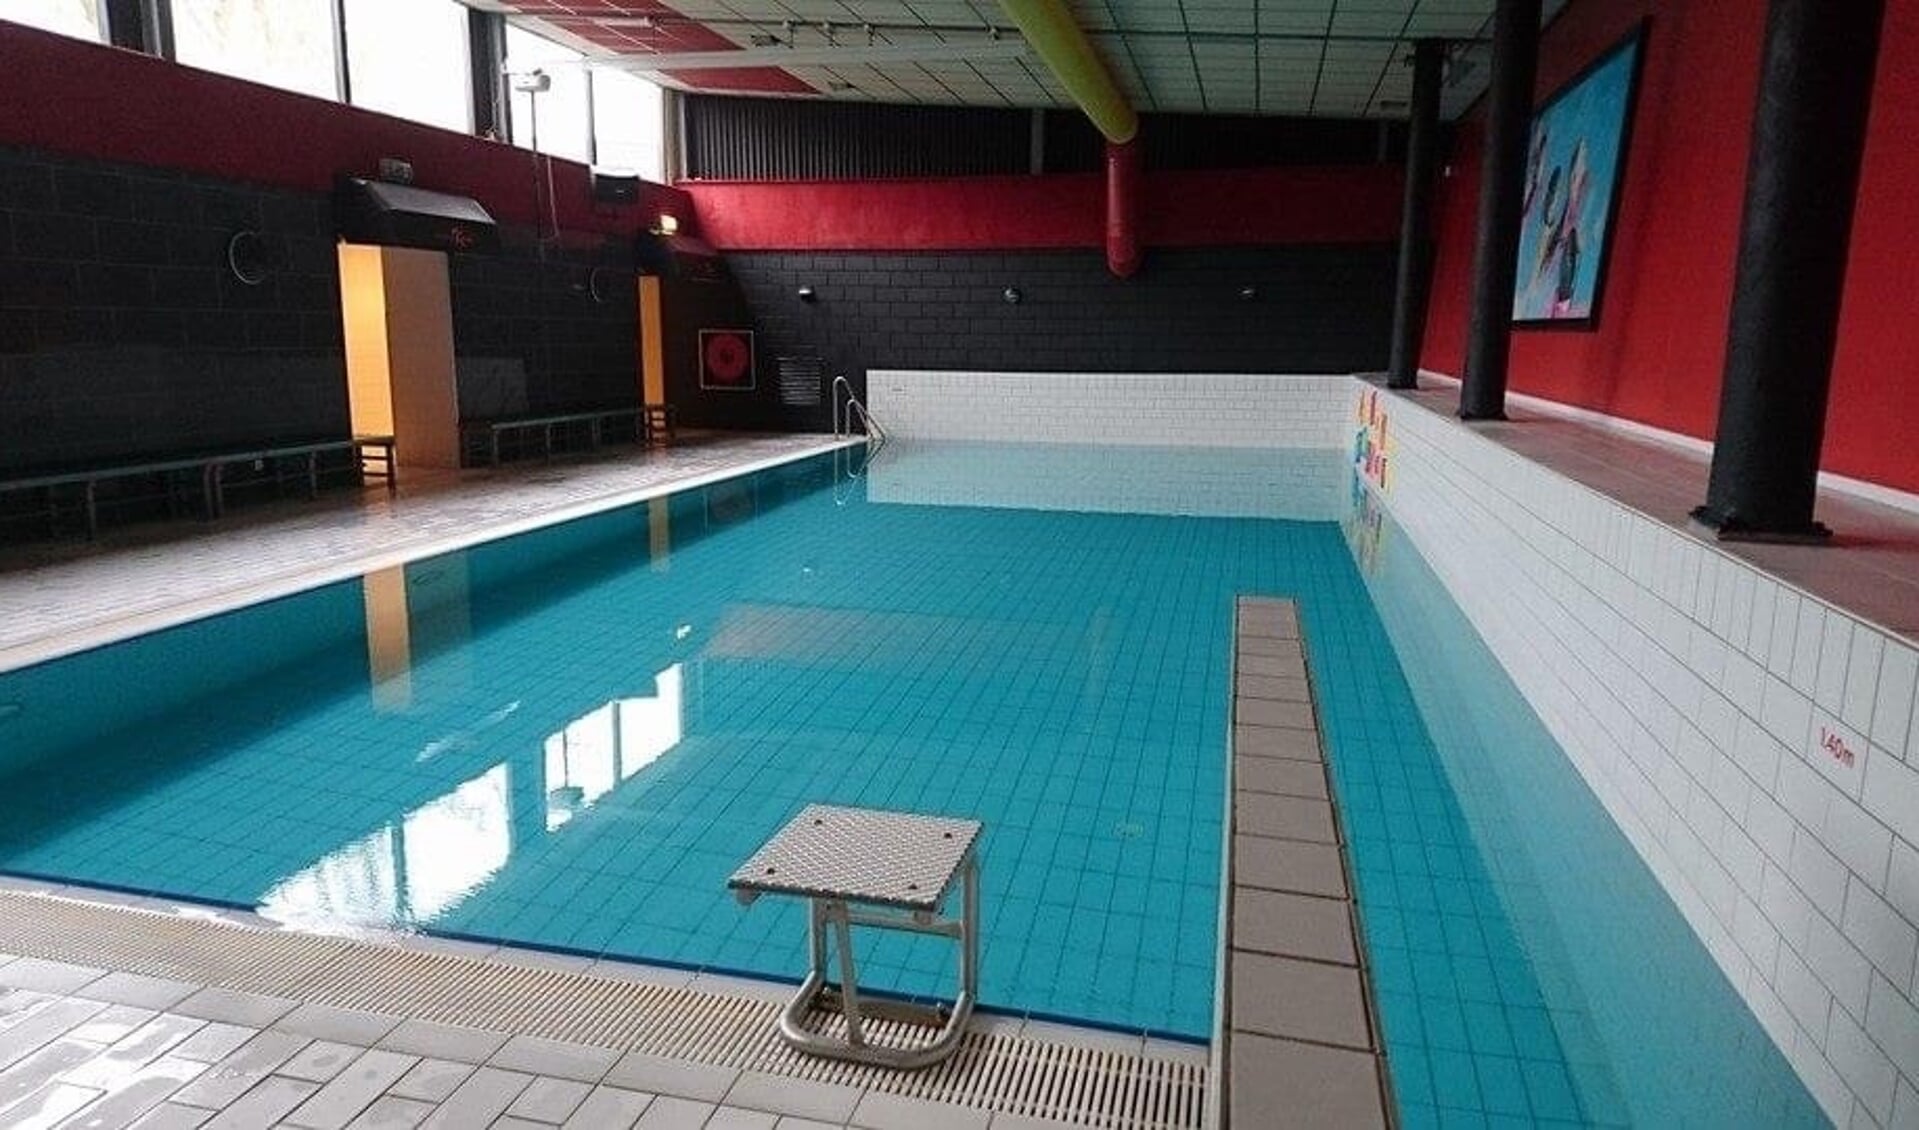 Zonder subsidie blijft het heel stil in Zwemcentrum Kollum, meldtVincent Gottschalk.